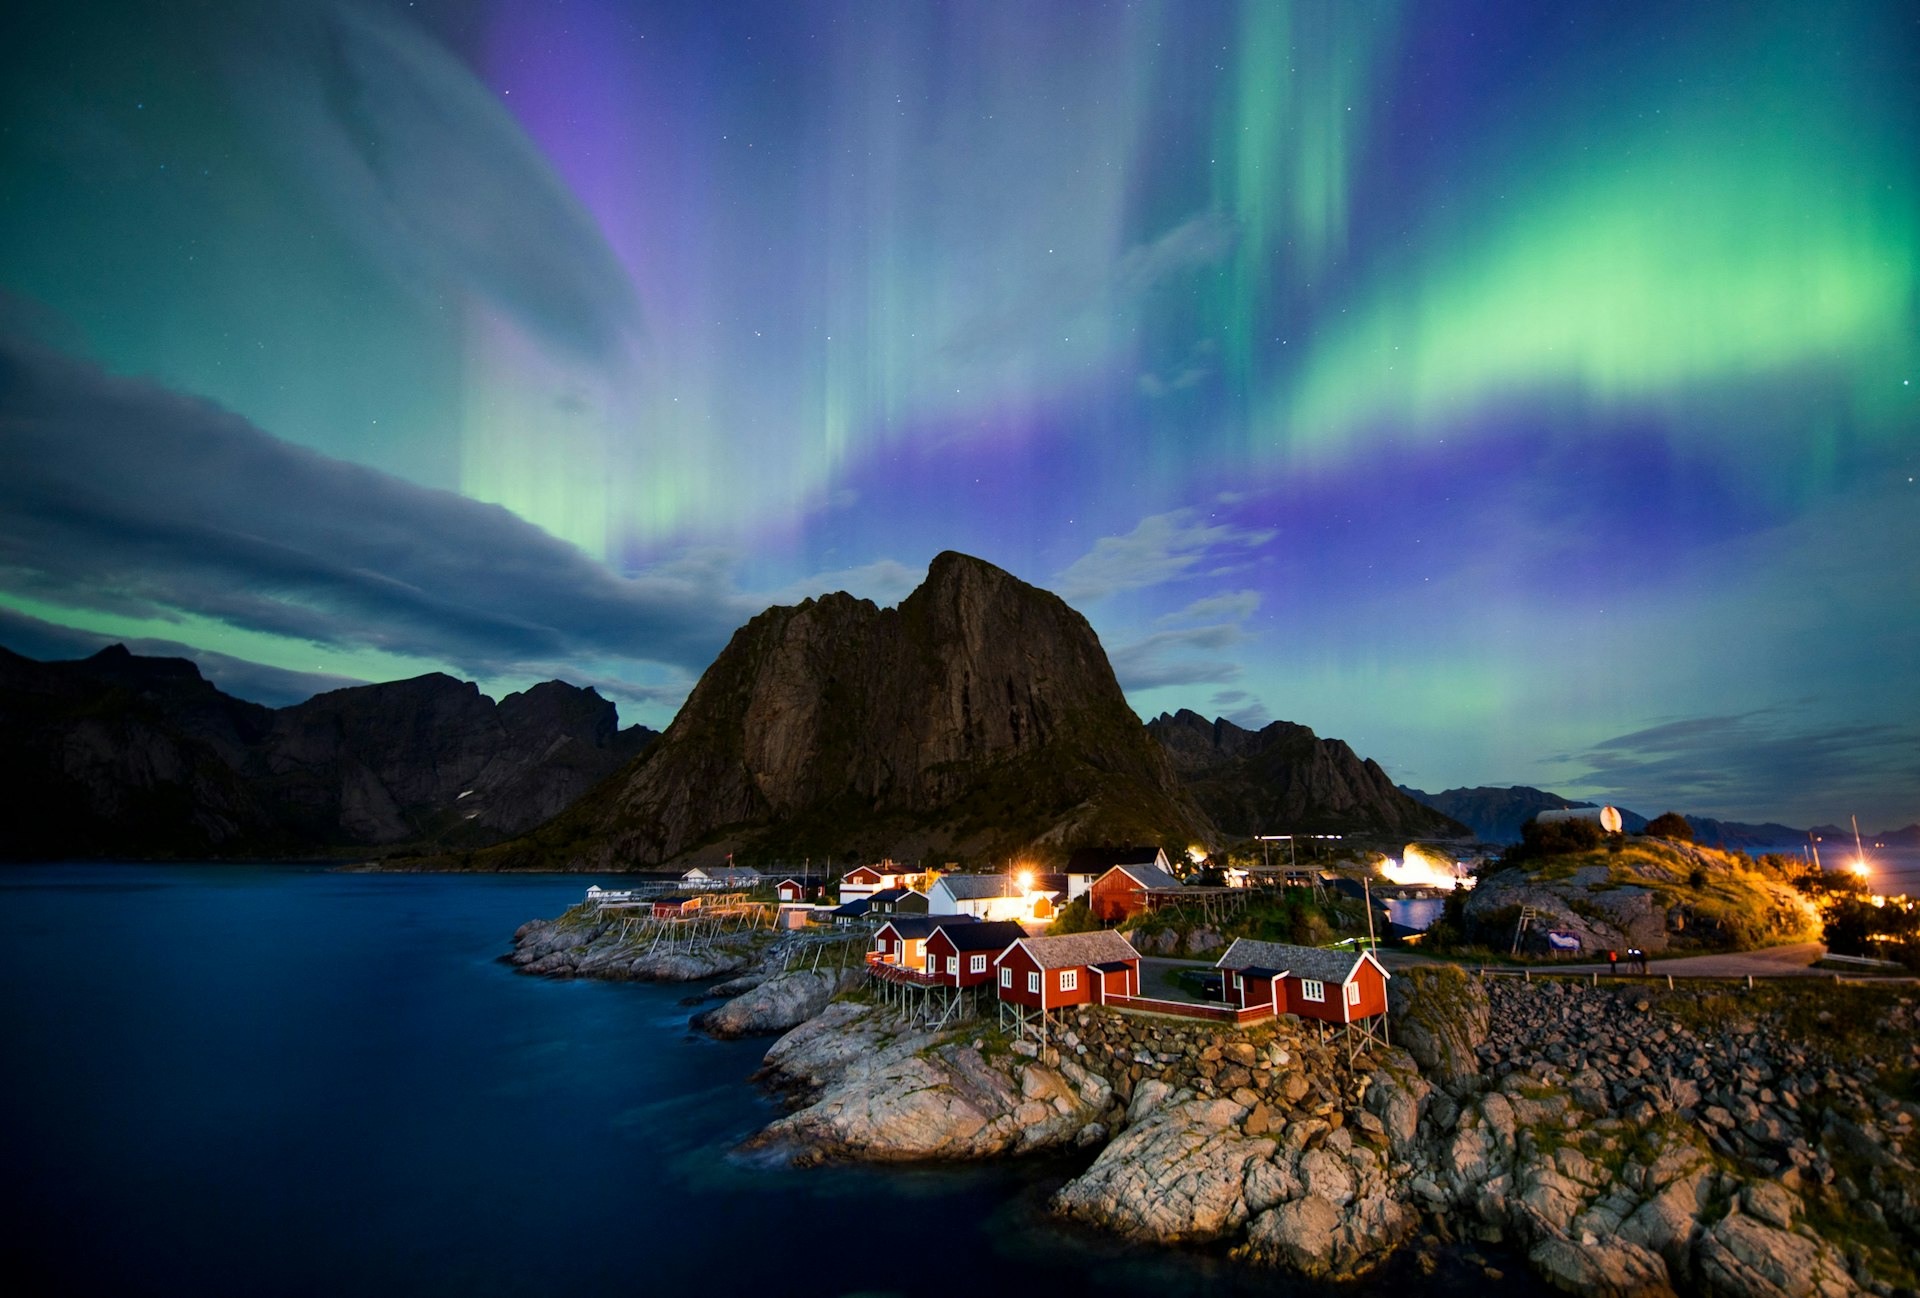 Northern lights (aurora borealis) illuminate the sky over Reinfjorden in Reine, Lofoten Islands, Norway